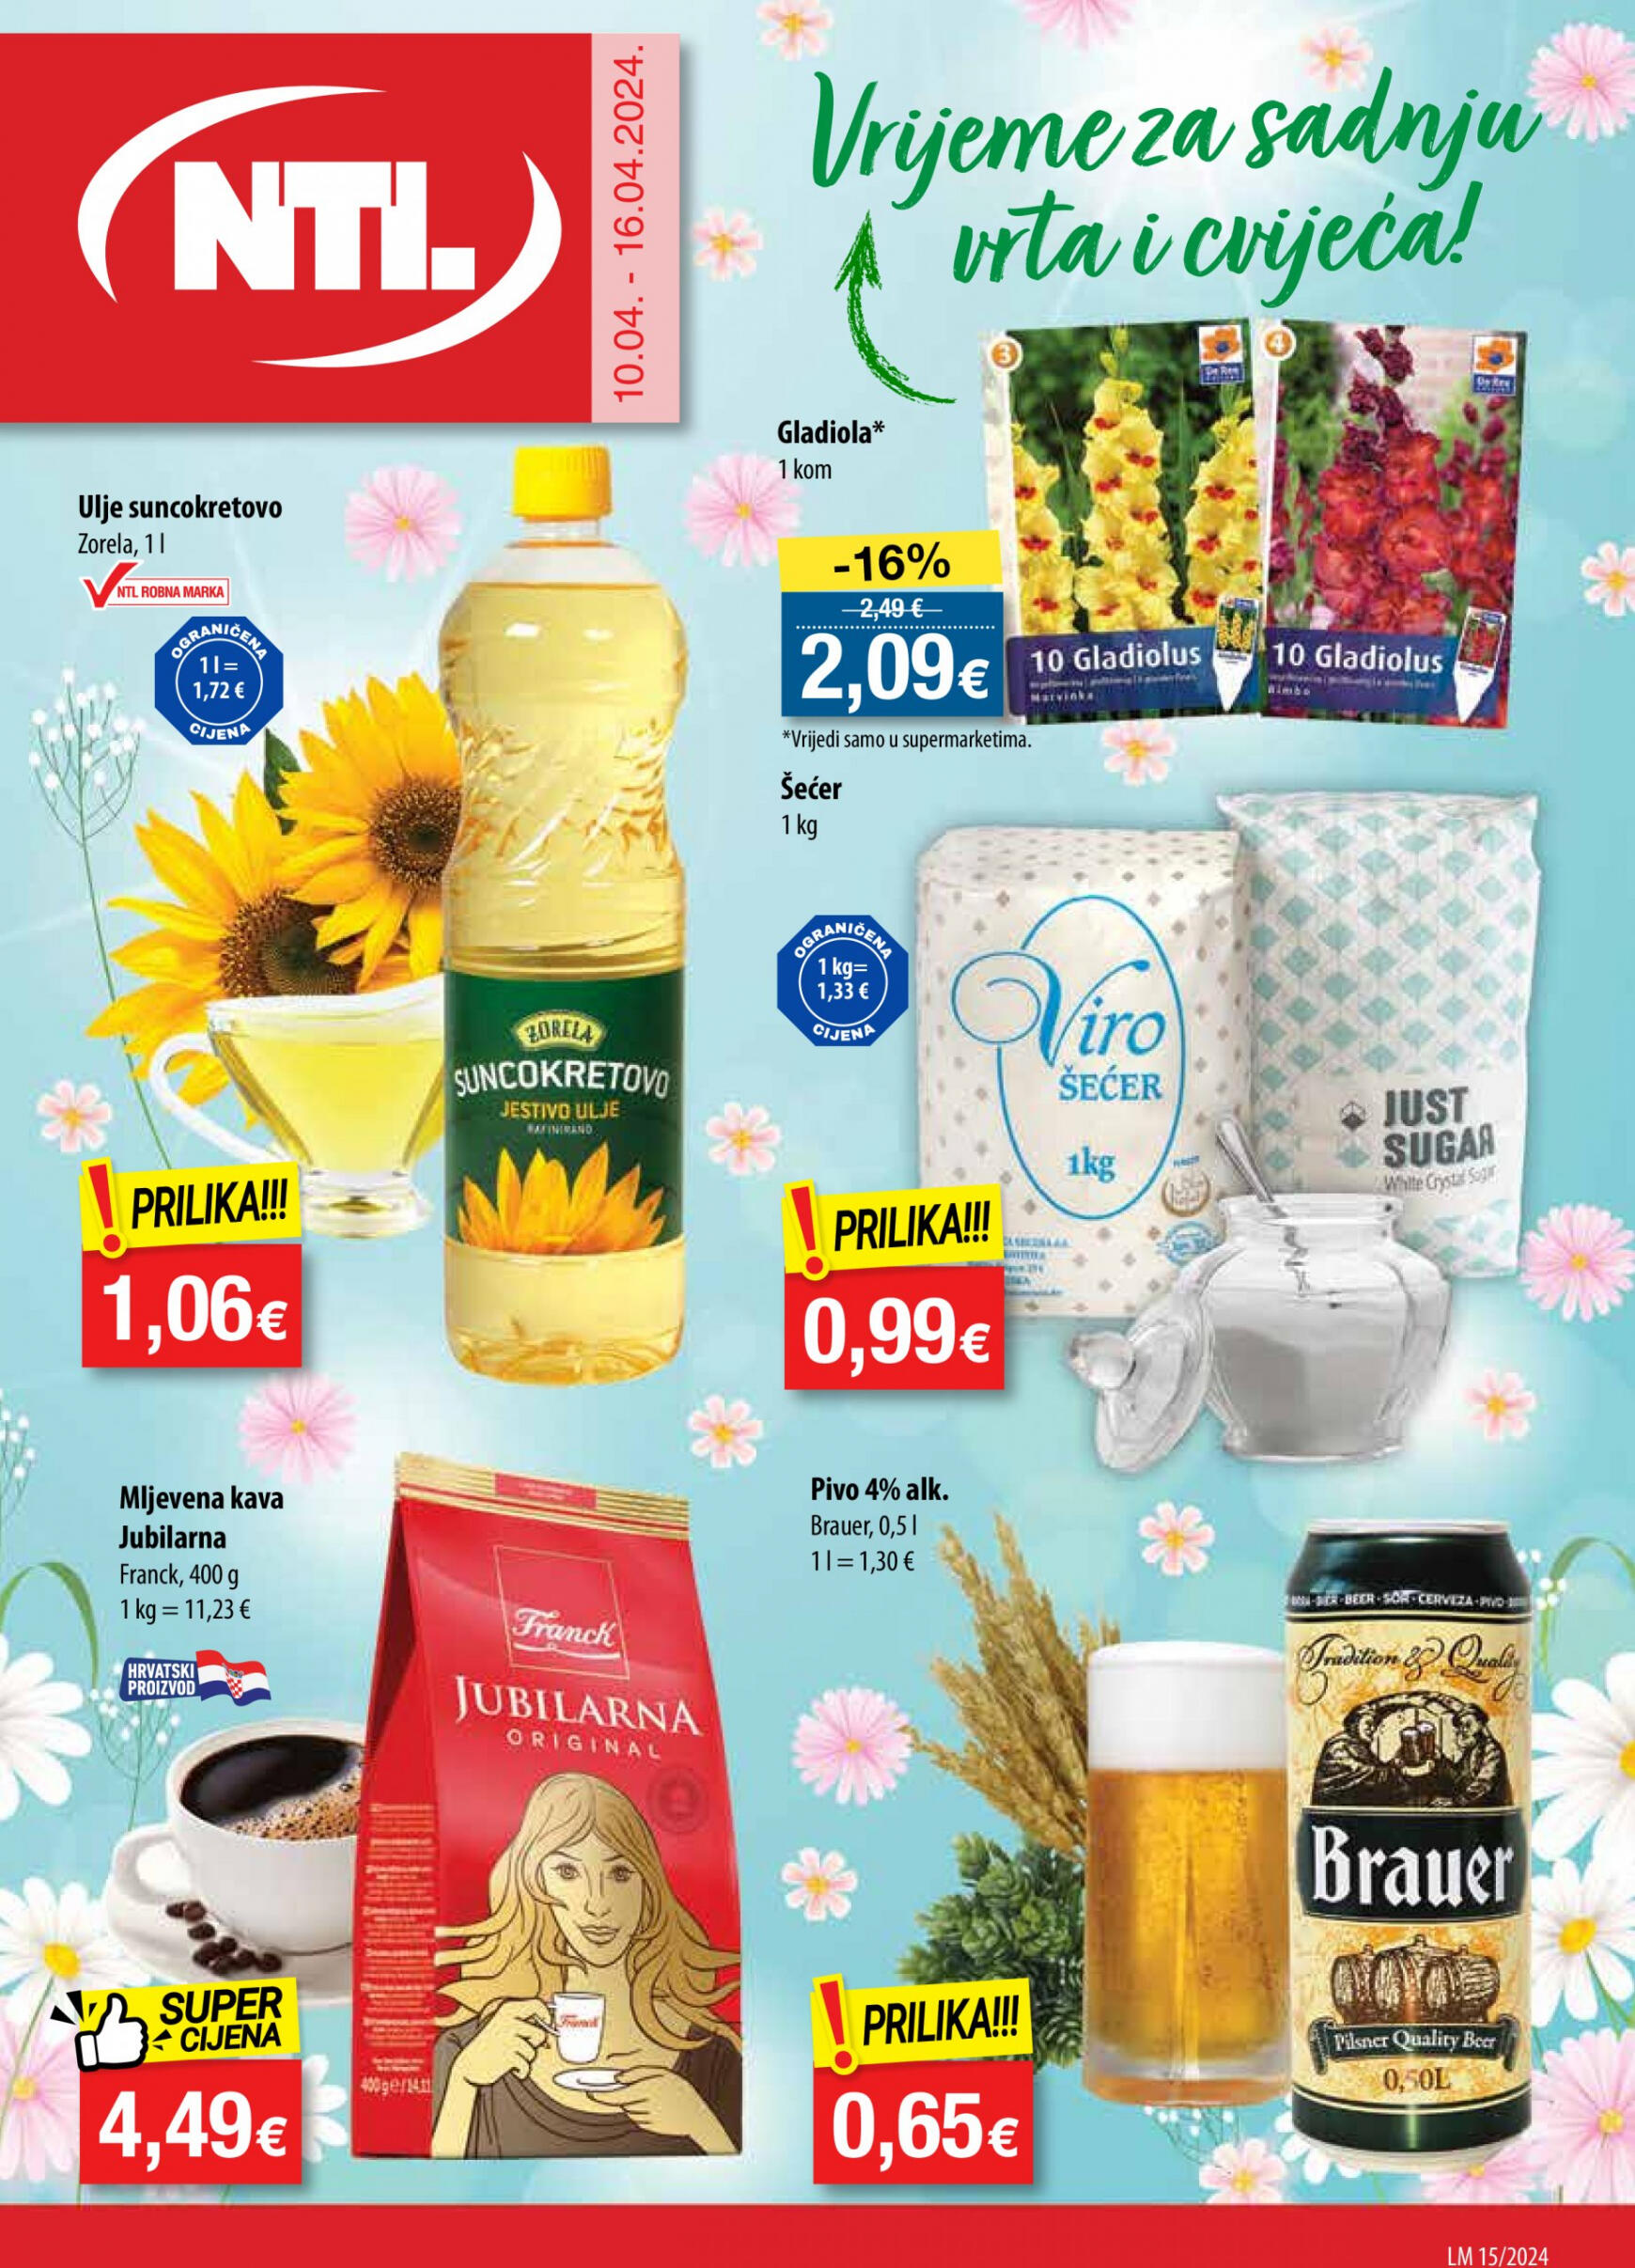 ntl - Novi katalog NTL - Supermarketi Soblinec, Krapina, Duga Resa 10.04. - 16.04. - page: 1